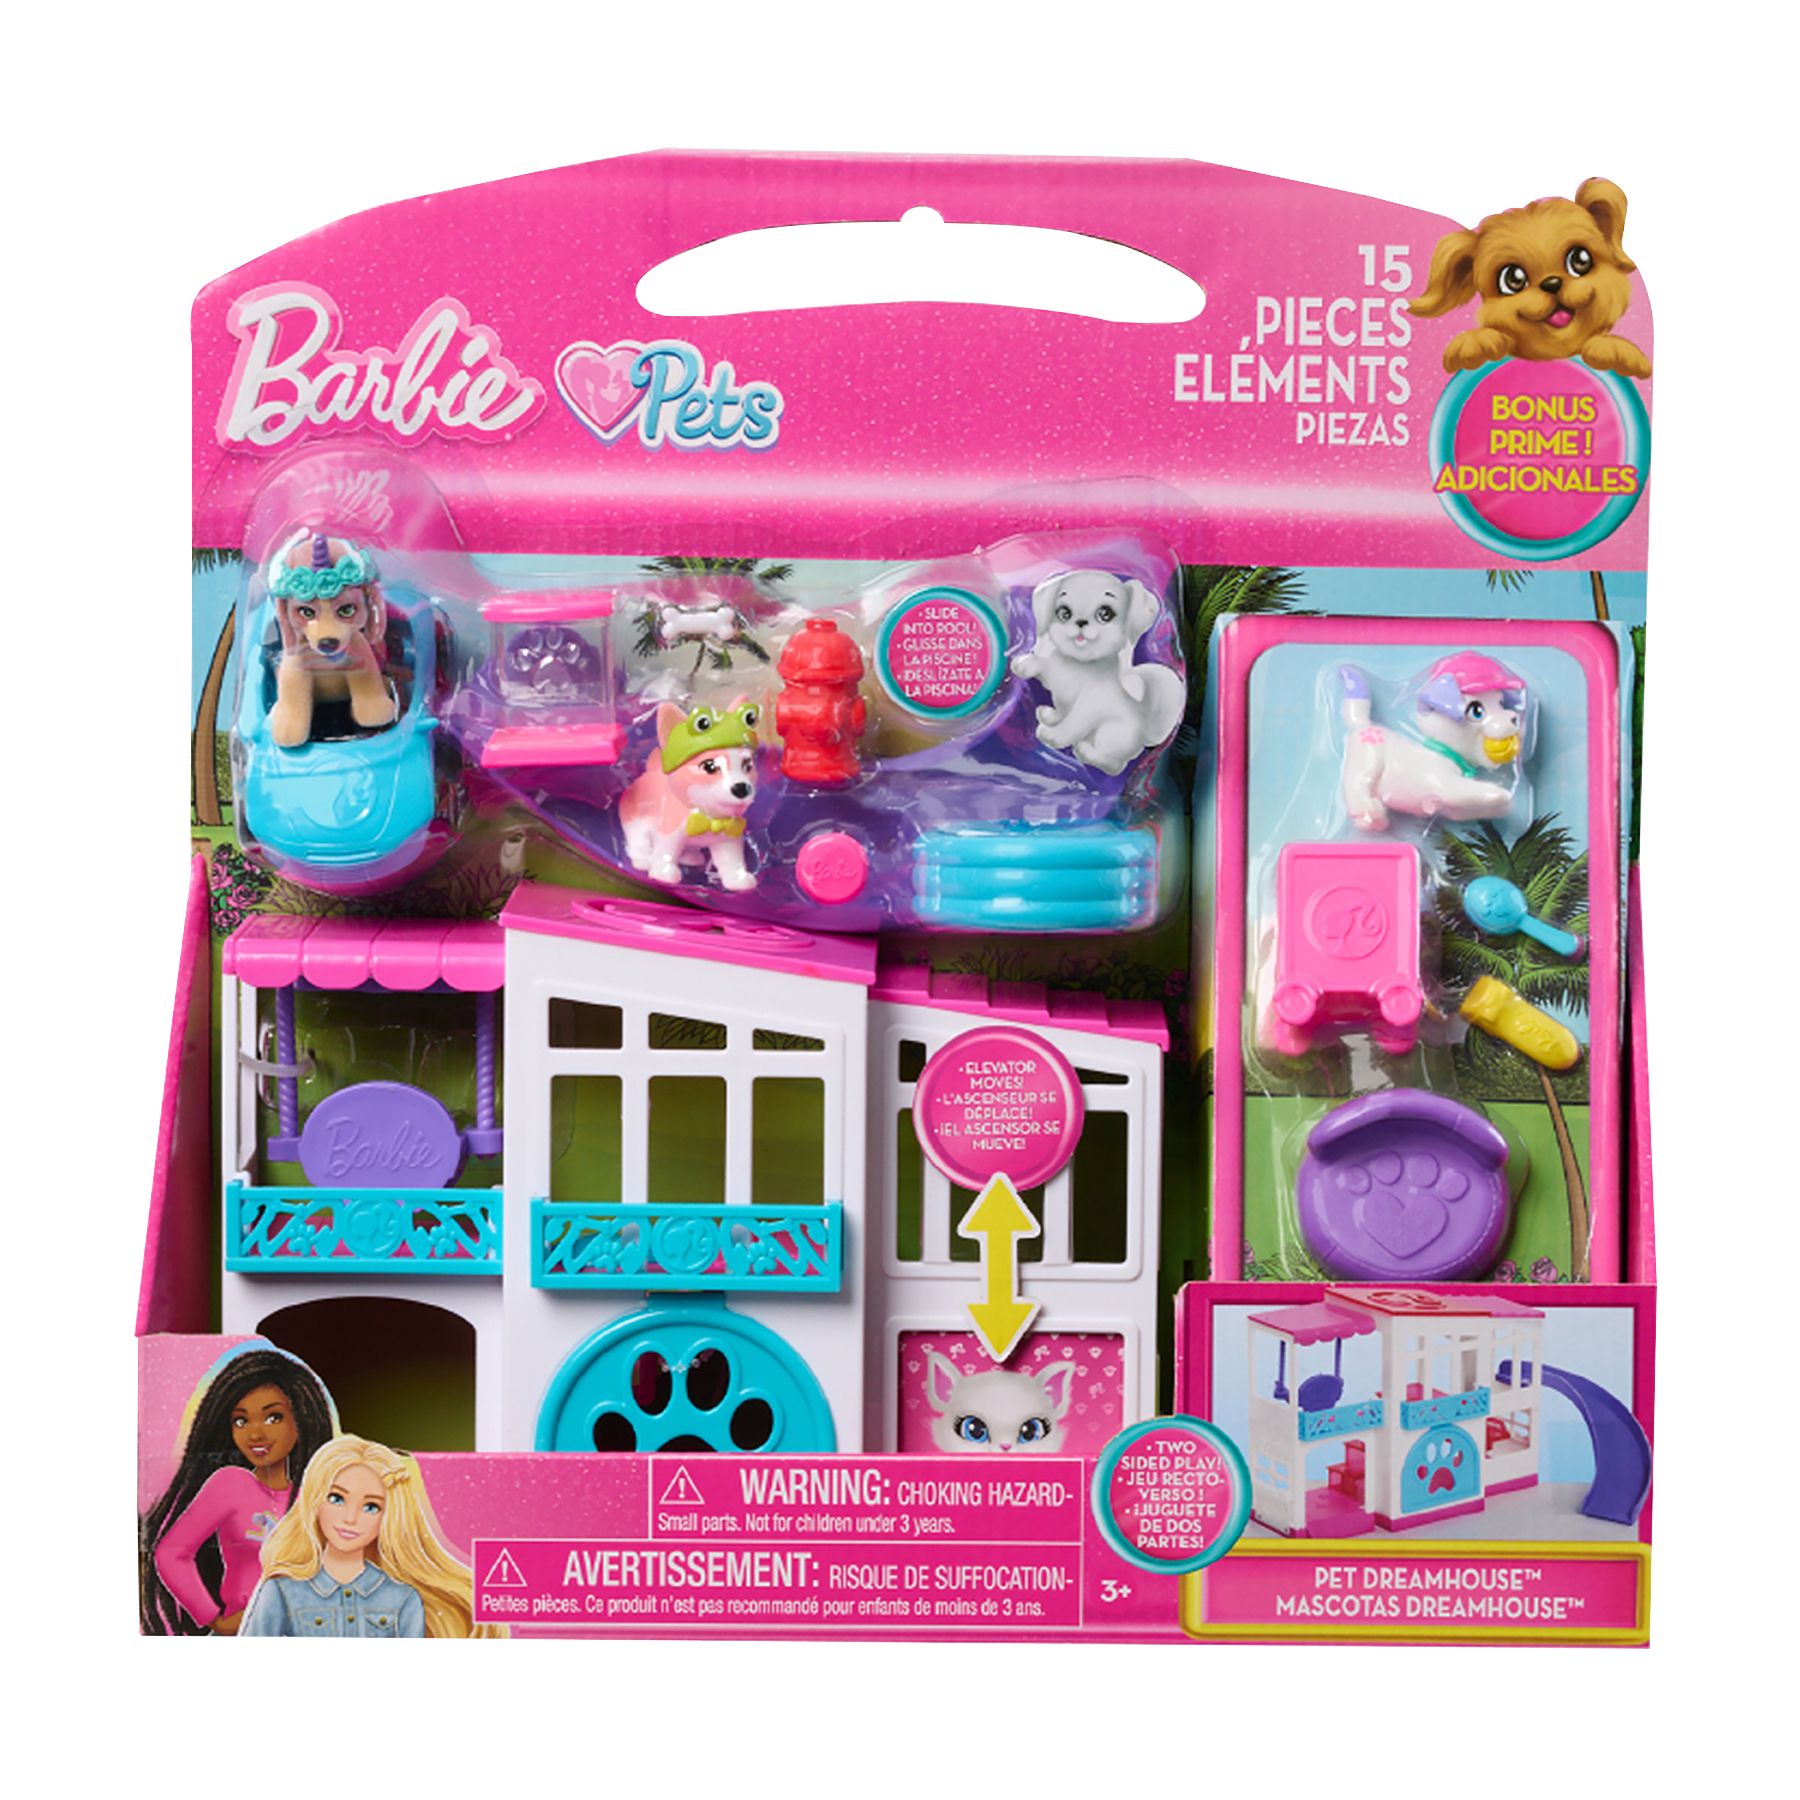 Barbie 2-Story Folding House & Doll Set